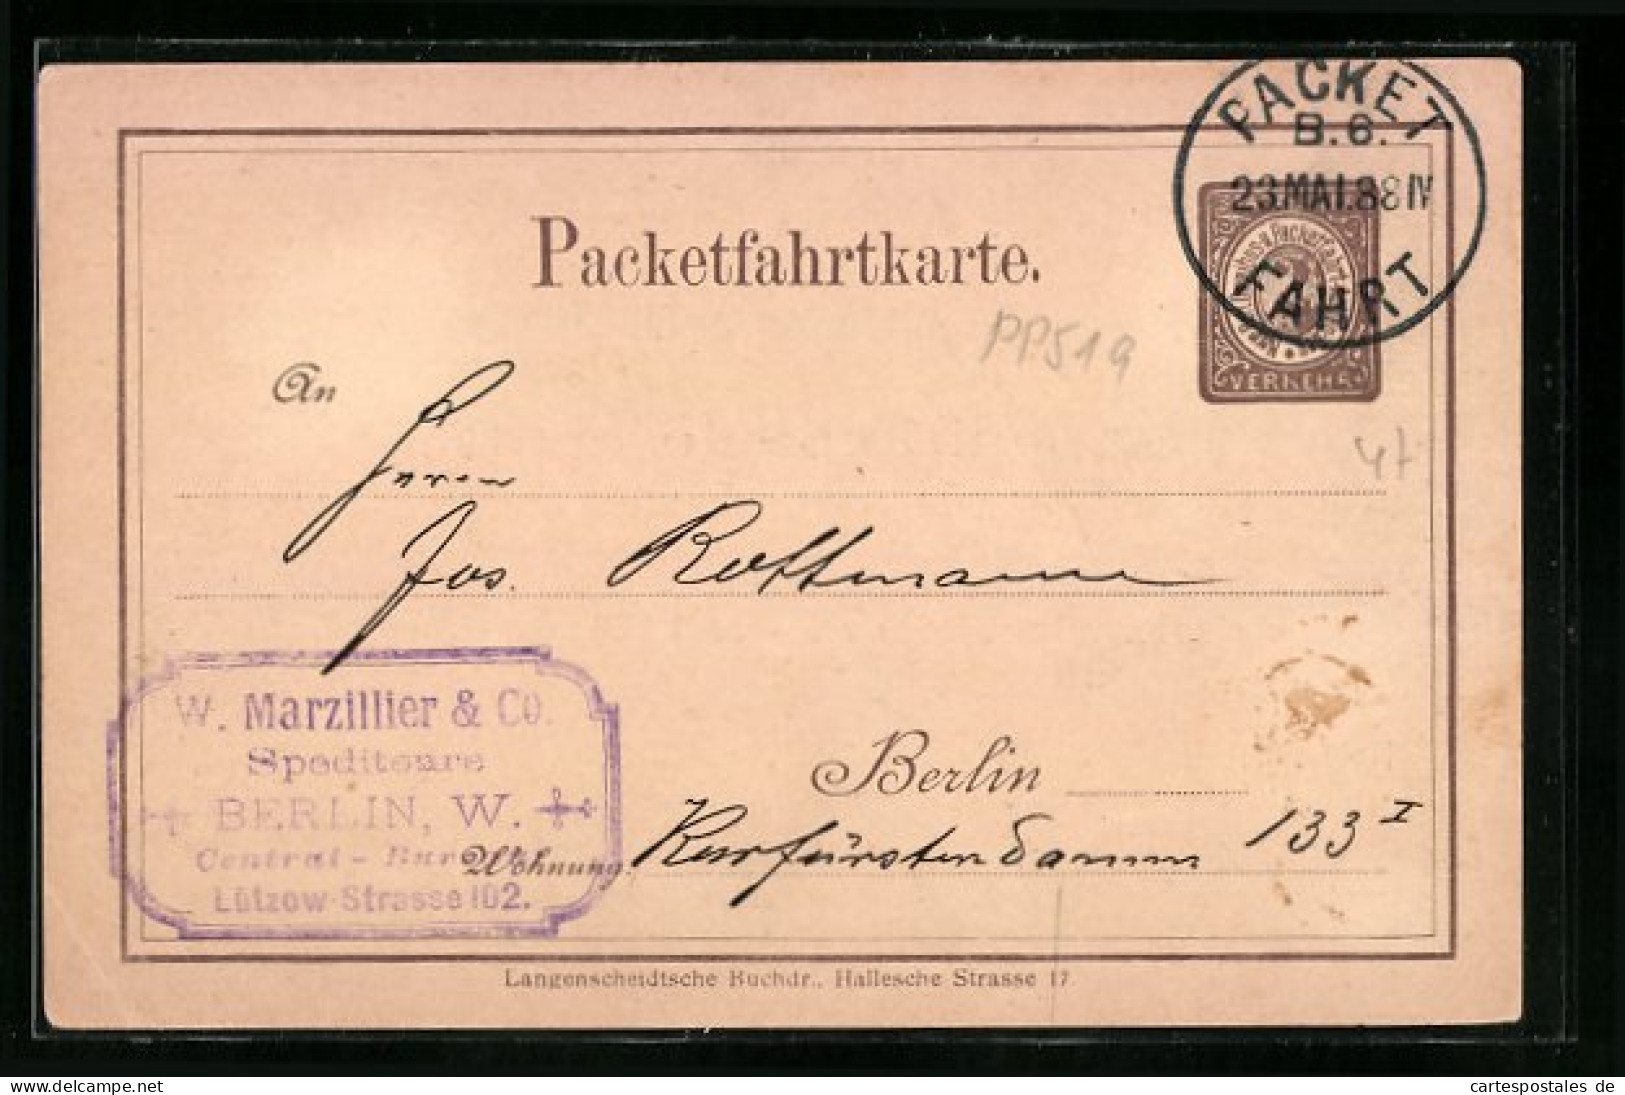 AK Packetfahrtkarte, 1888, Berliner Packetfahrt AG, Ganzsache  - Timbres (représentations)